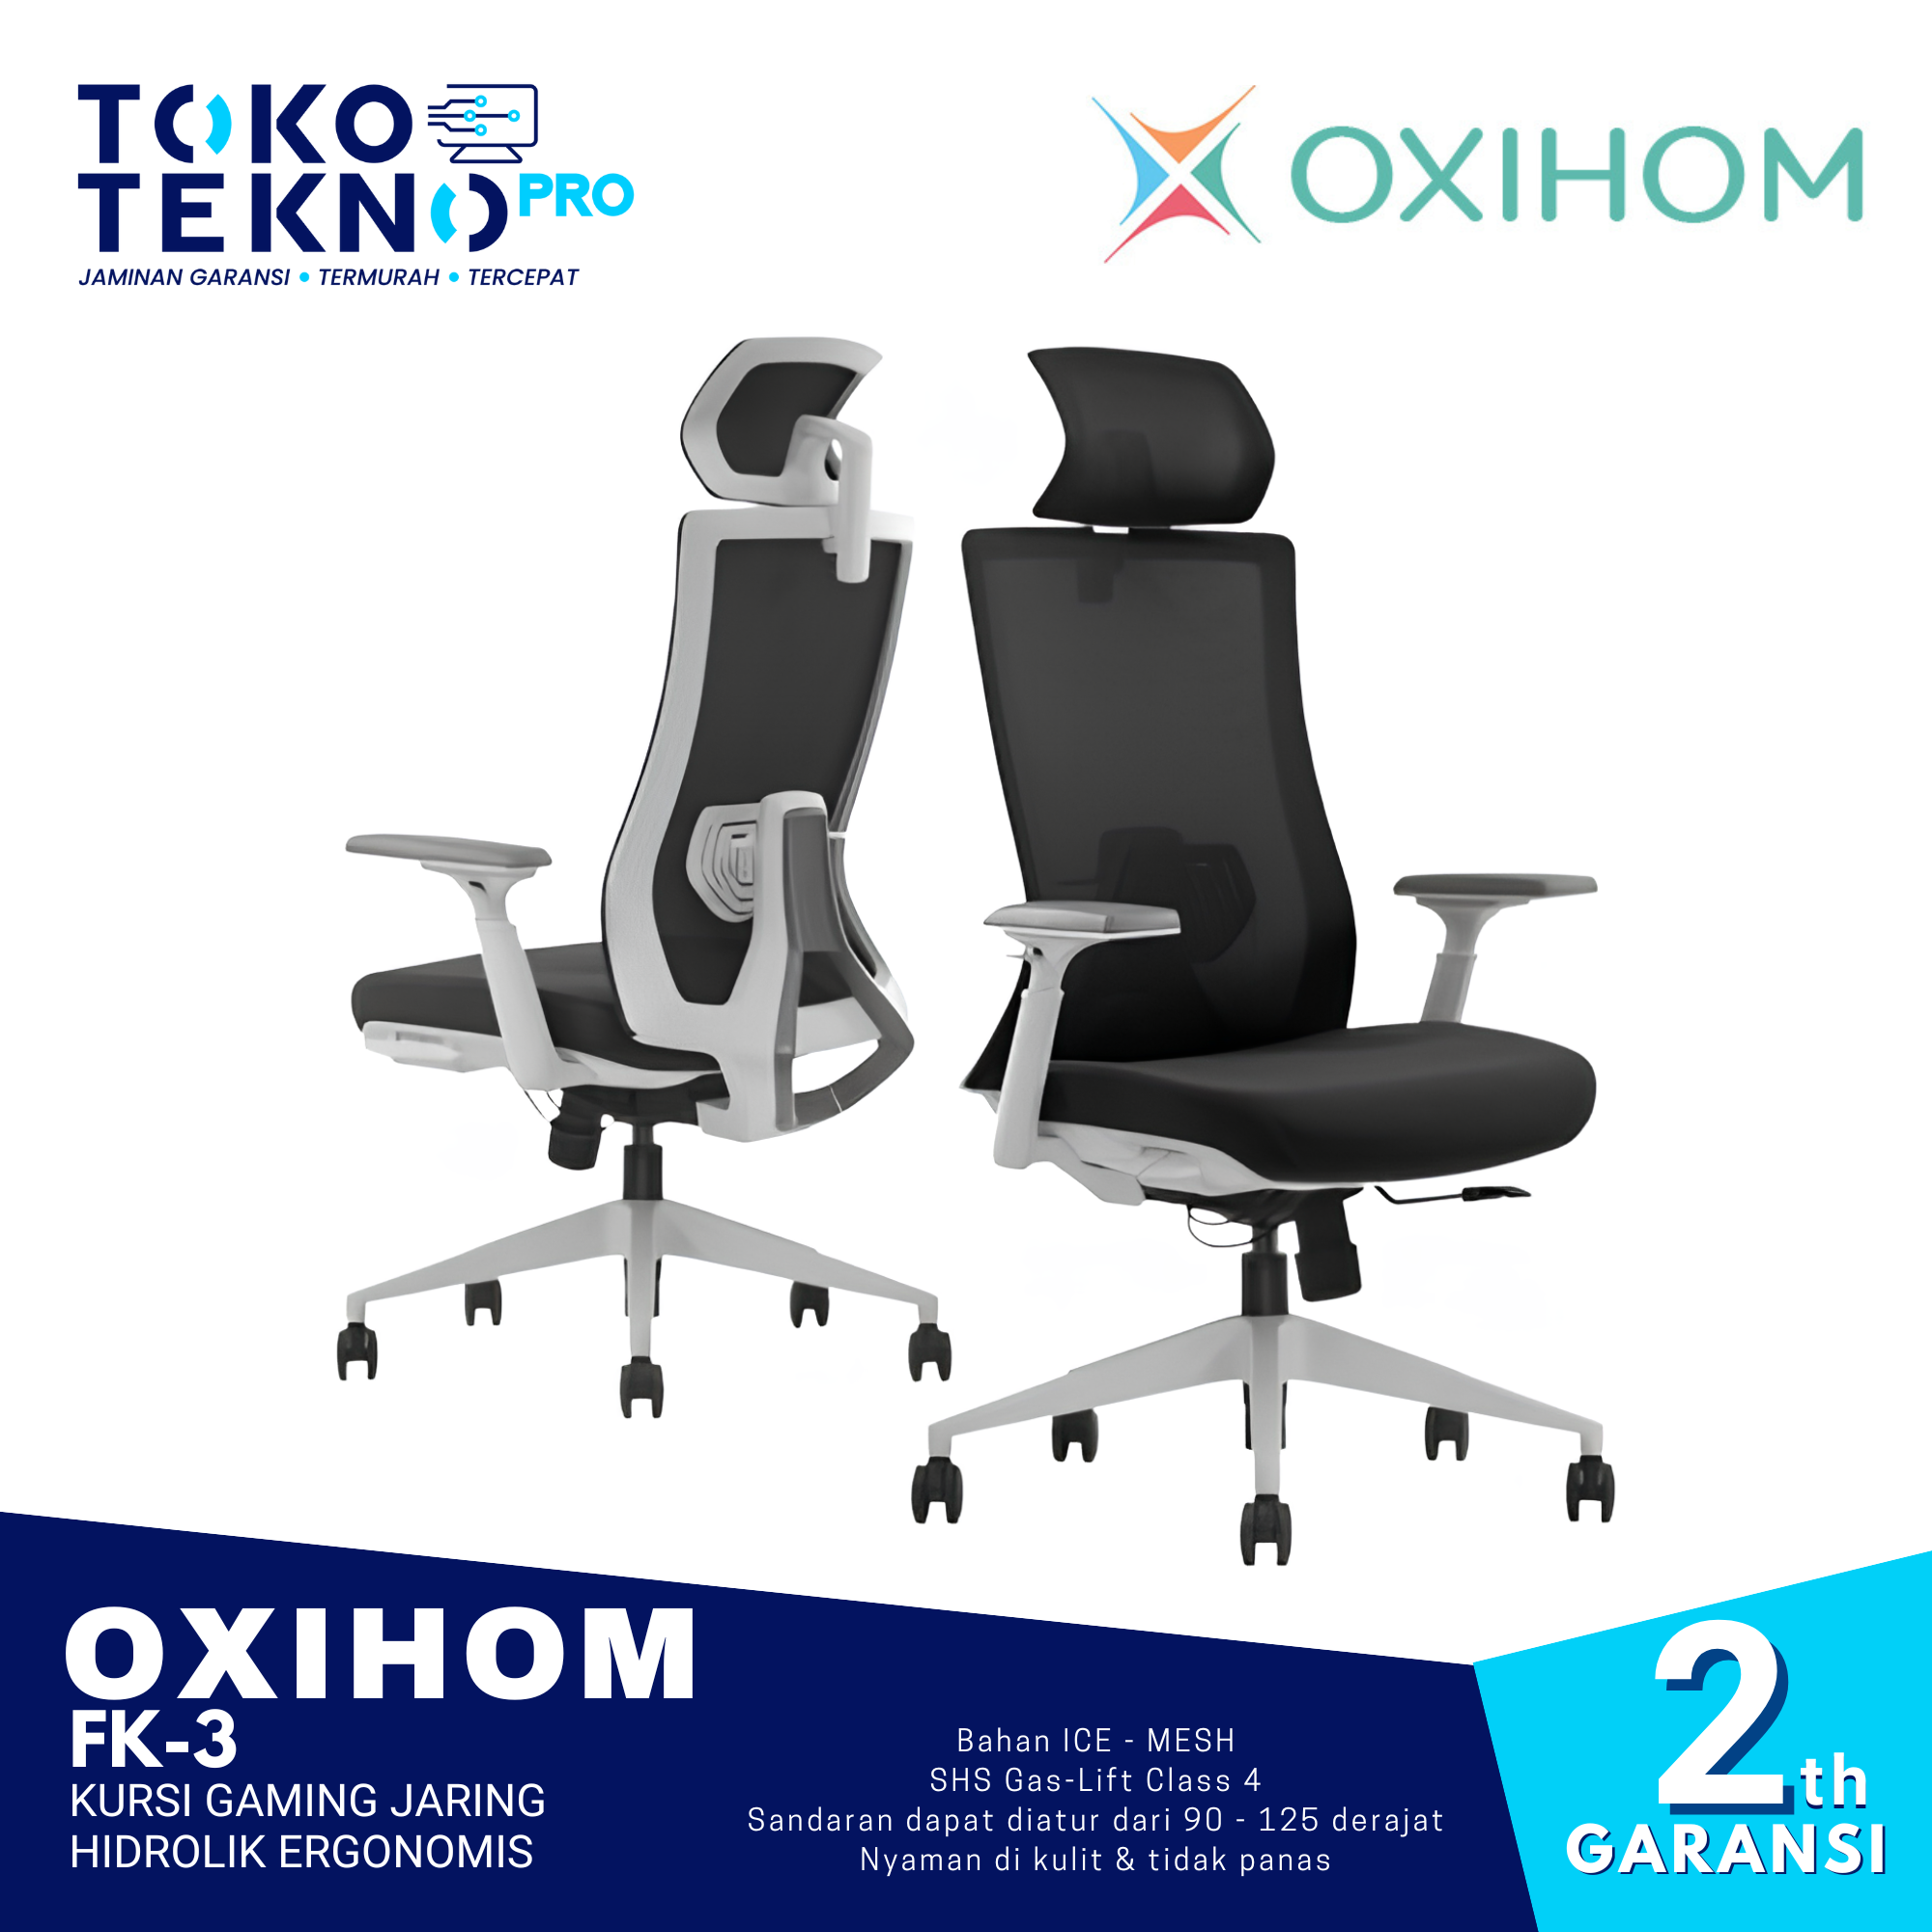 Oxihom FK-3